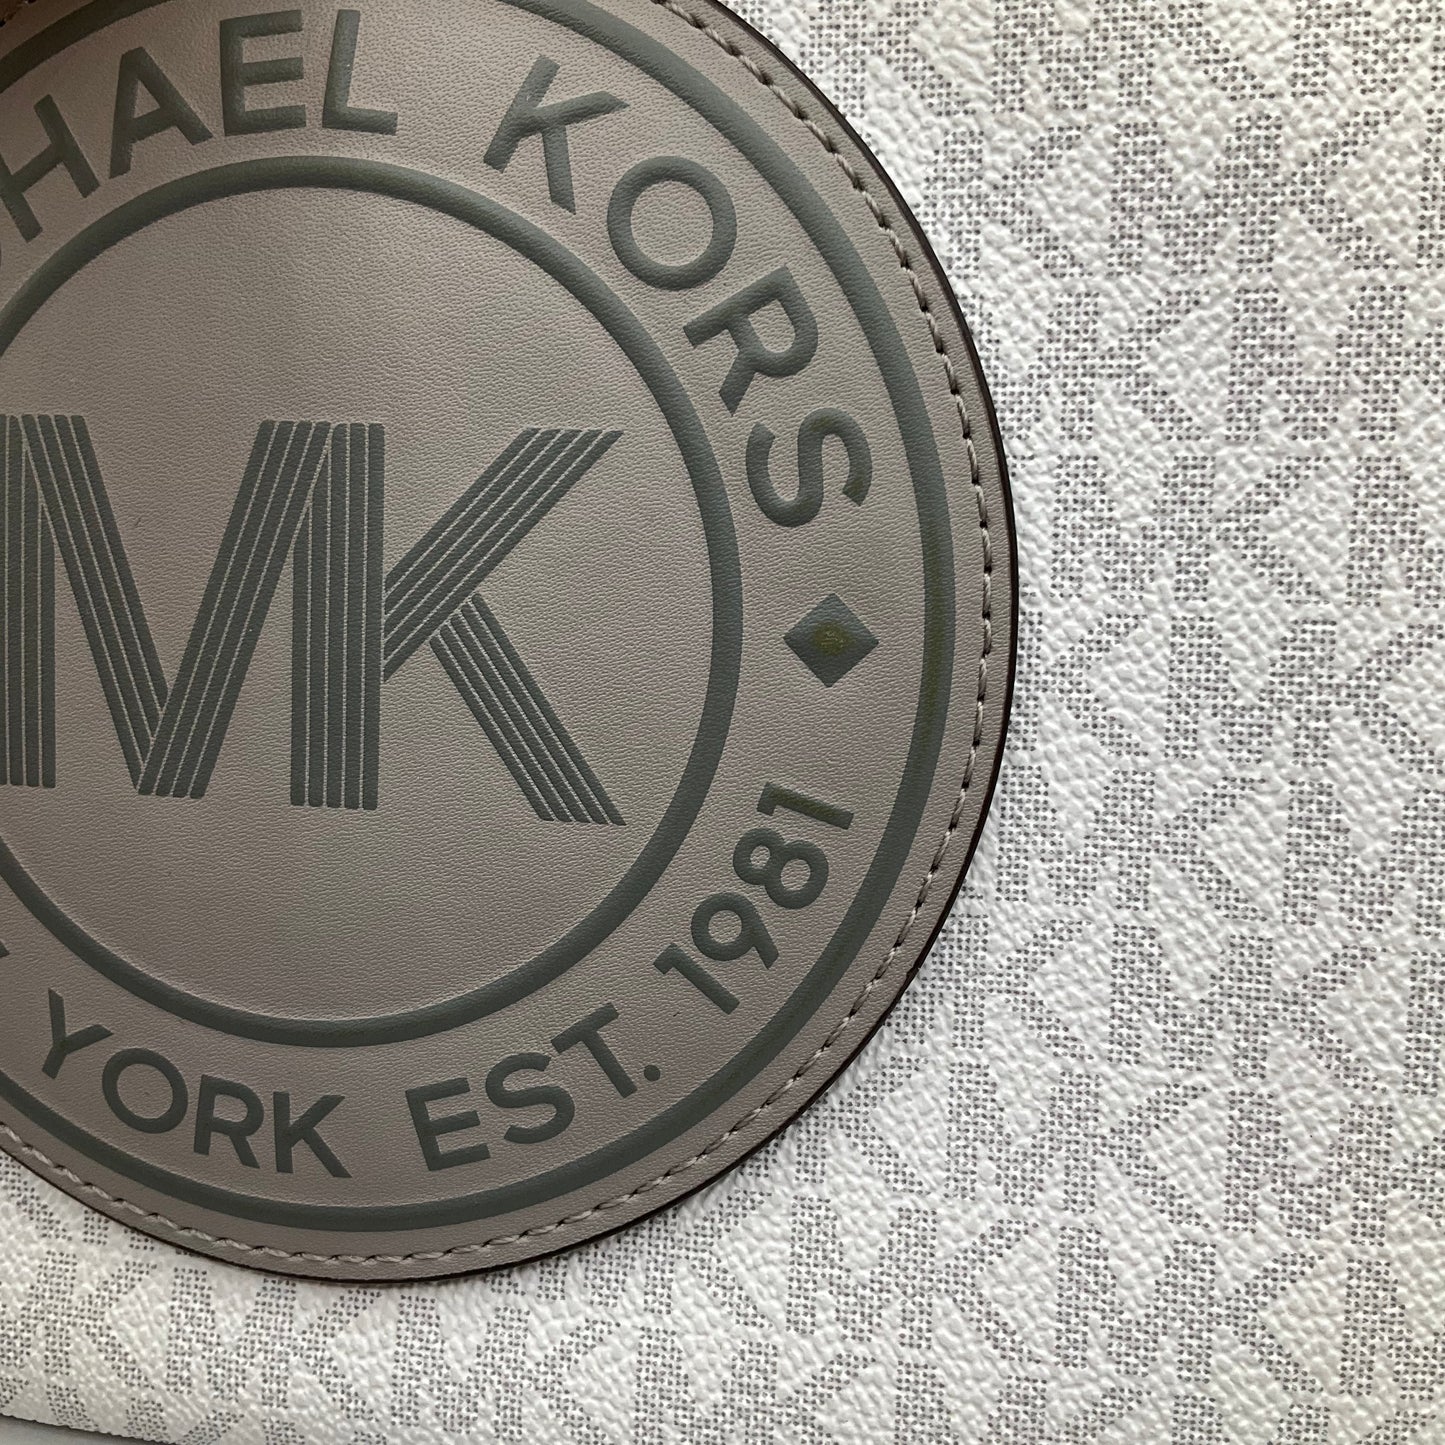 Wristlet Designer By Michael Kors  Size: Medium